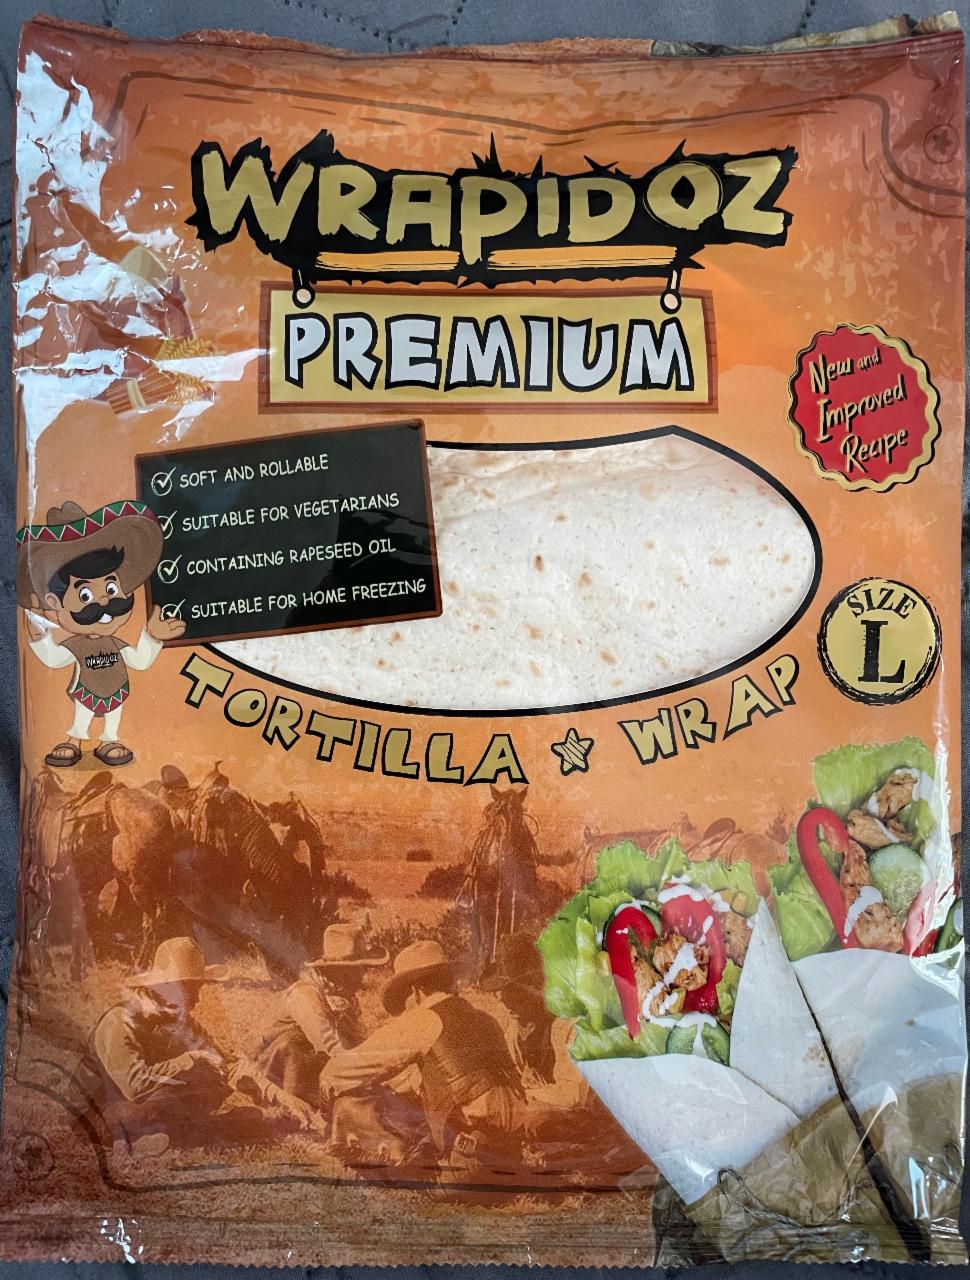 Képek - Tortilla wrap premium Wrapidoz